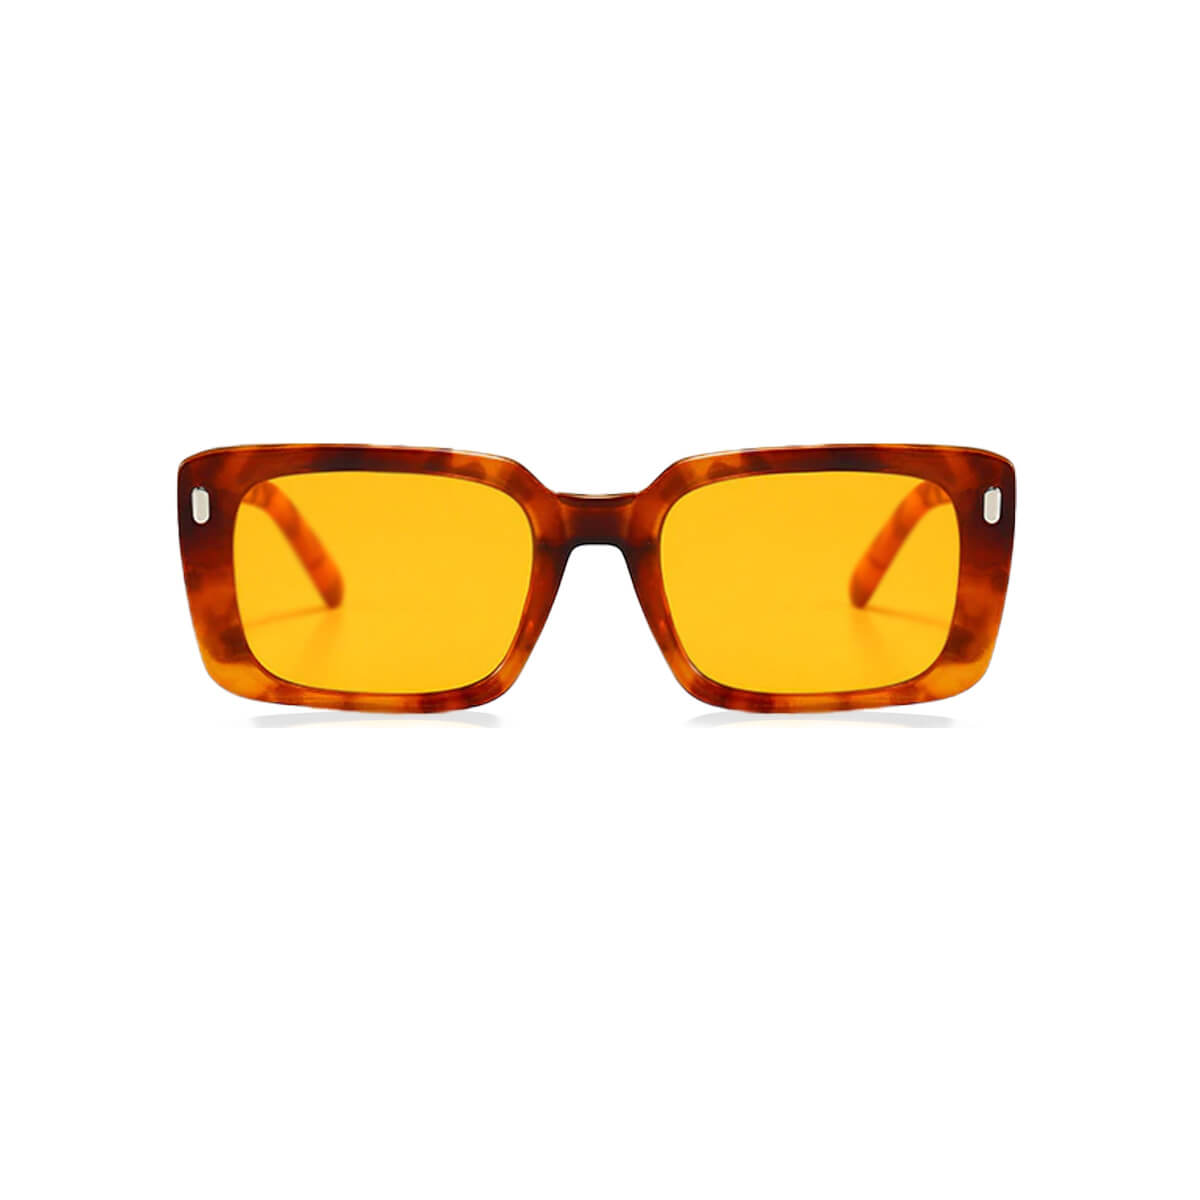 Tortoise Frame Sunglasses With Orange Lens Front